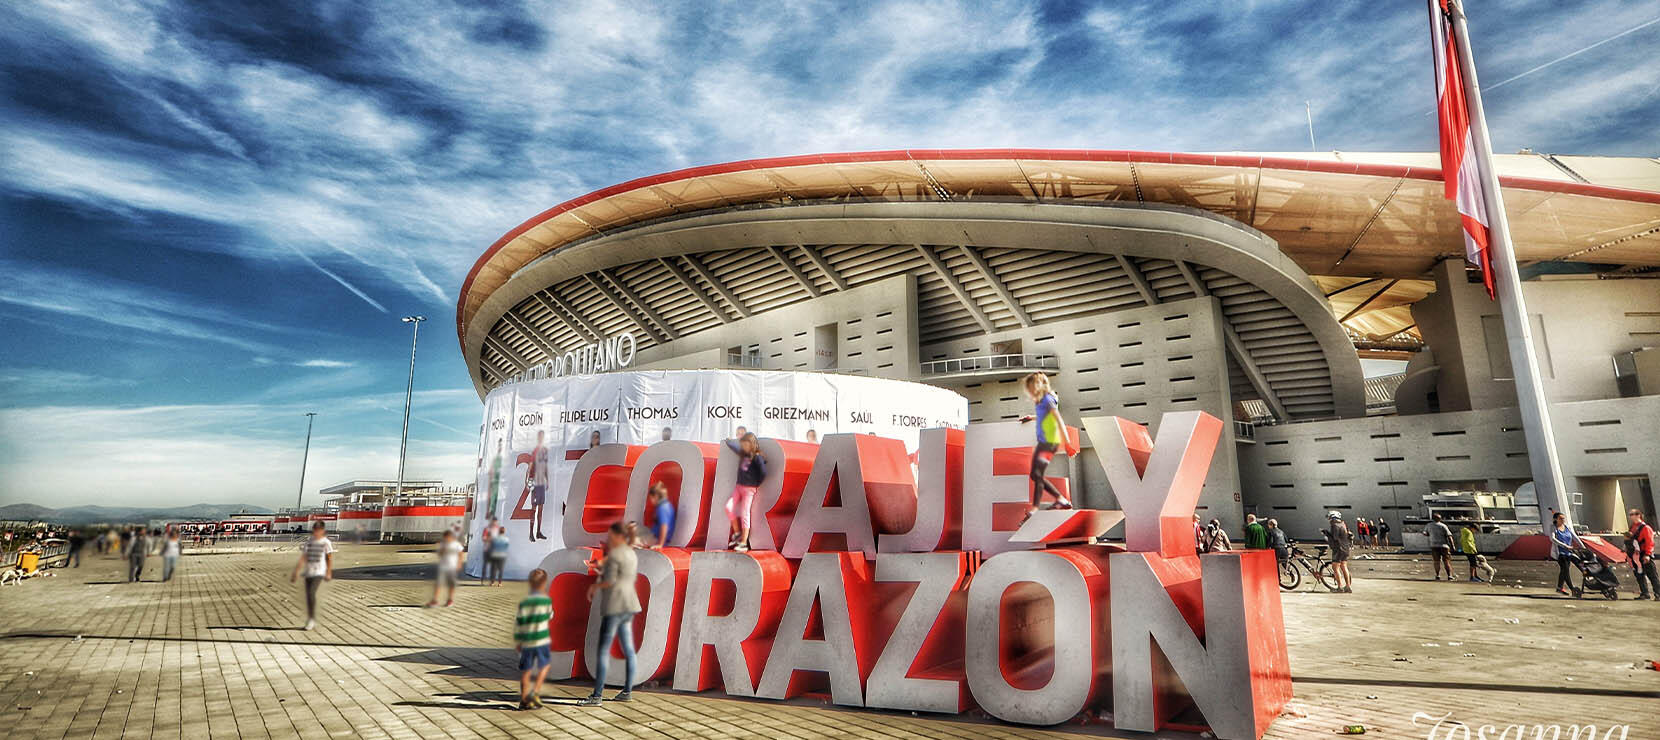 Another Iconic Project: Football Stadium Wanda Metropolitano